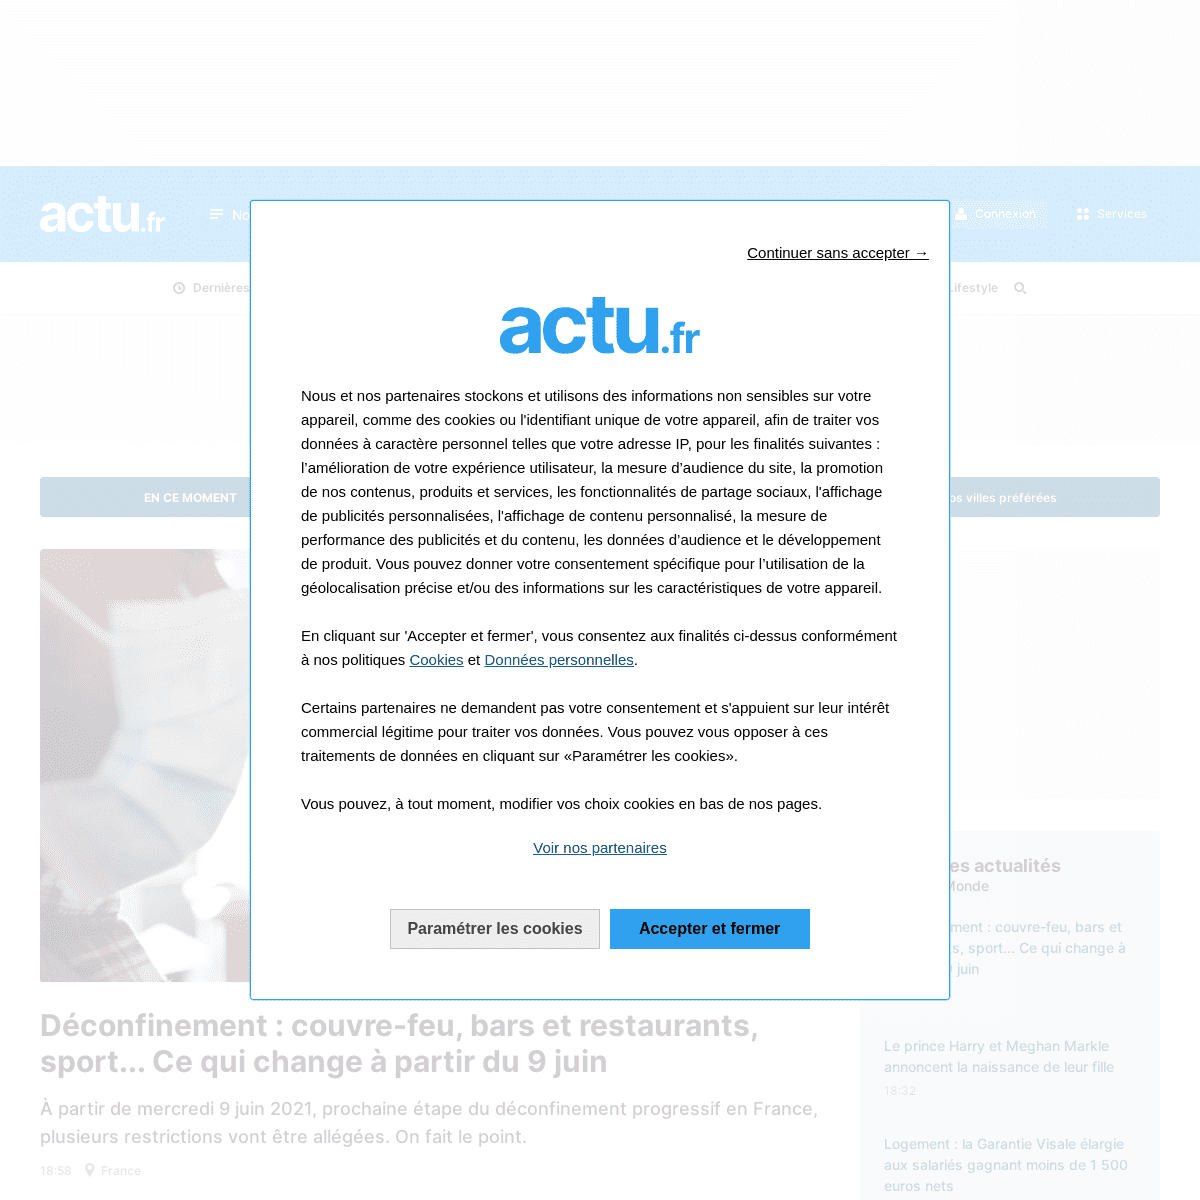 A complete backup of https://actu.fr